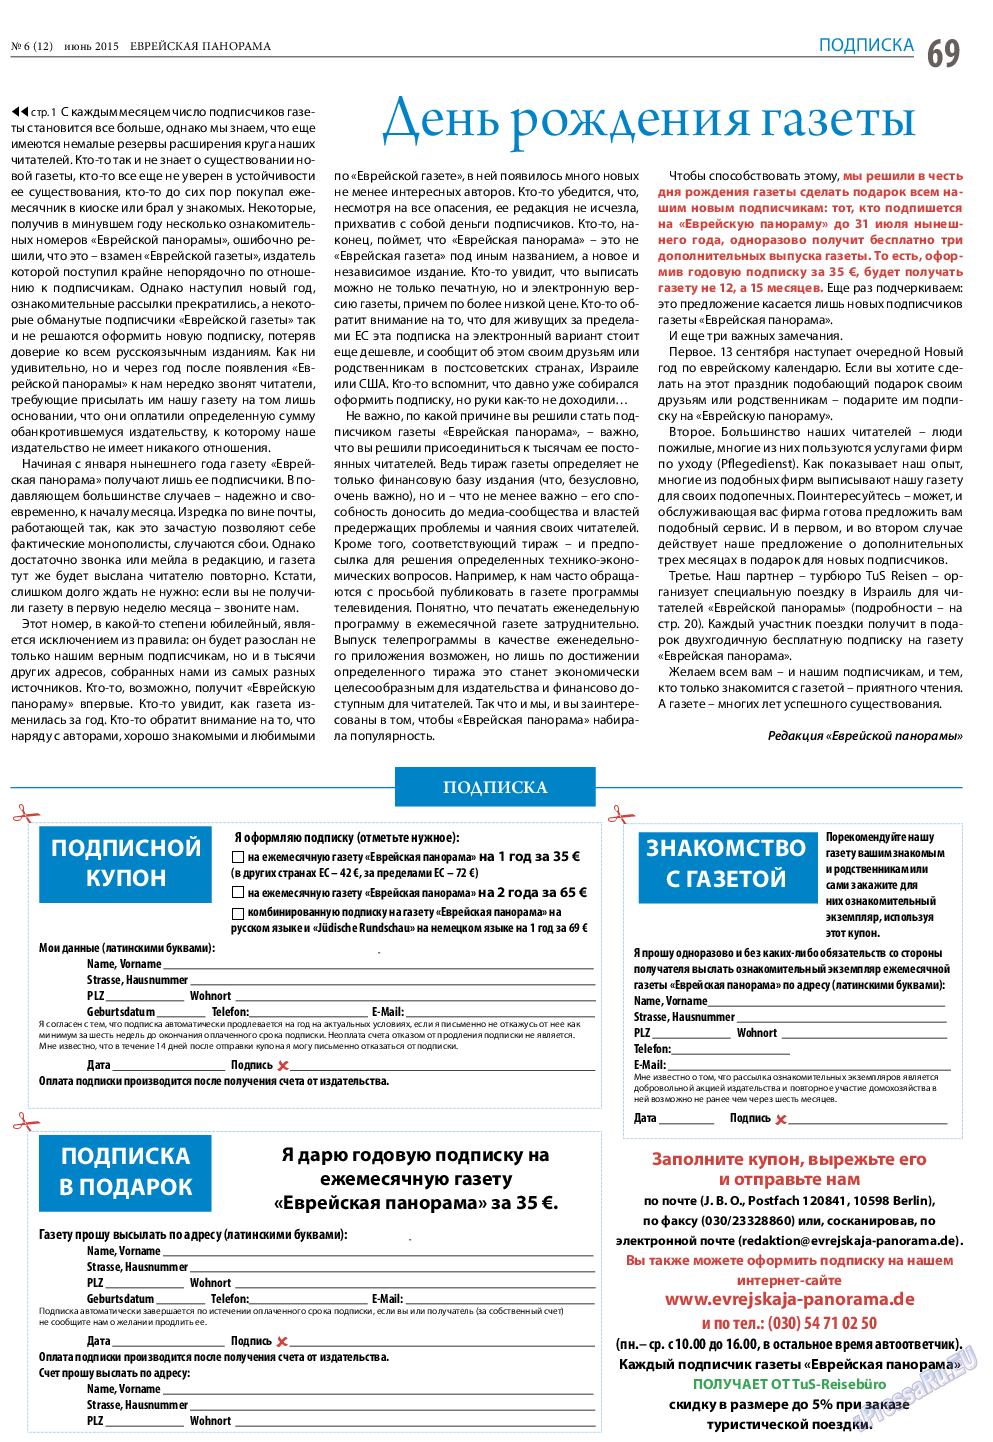 Еврейская панорама, газета. 2015 №6 стр.69